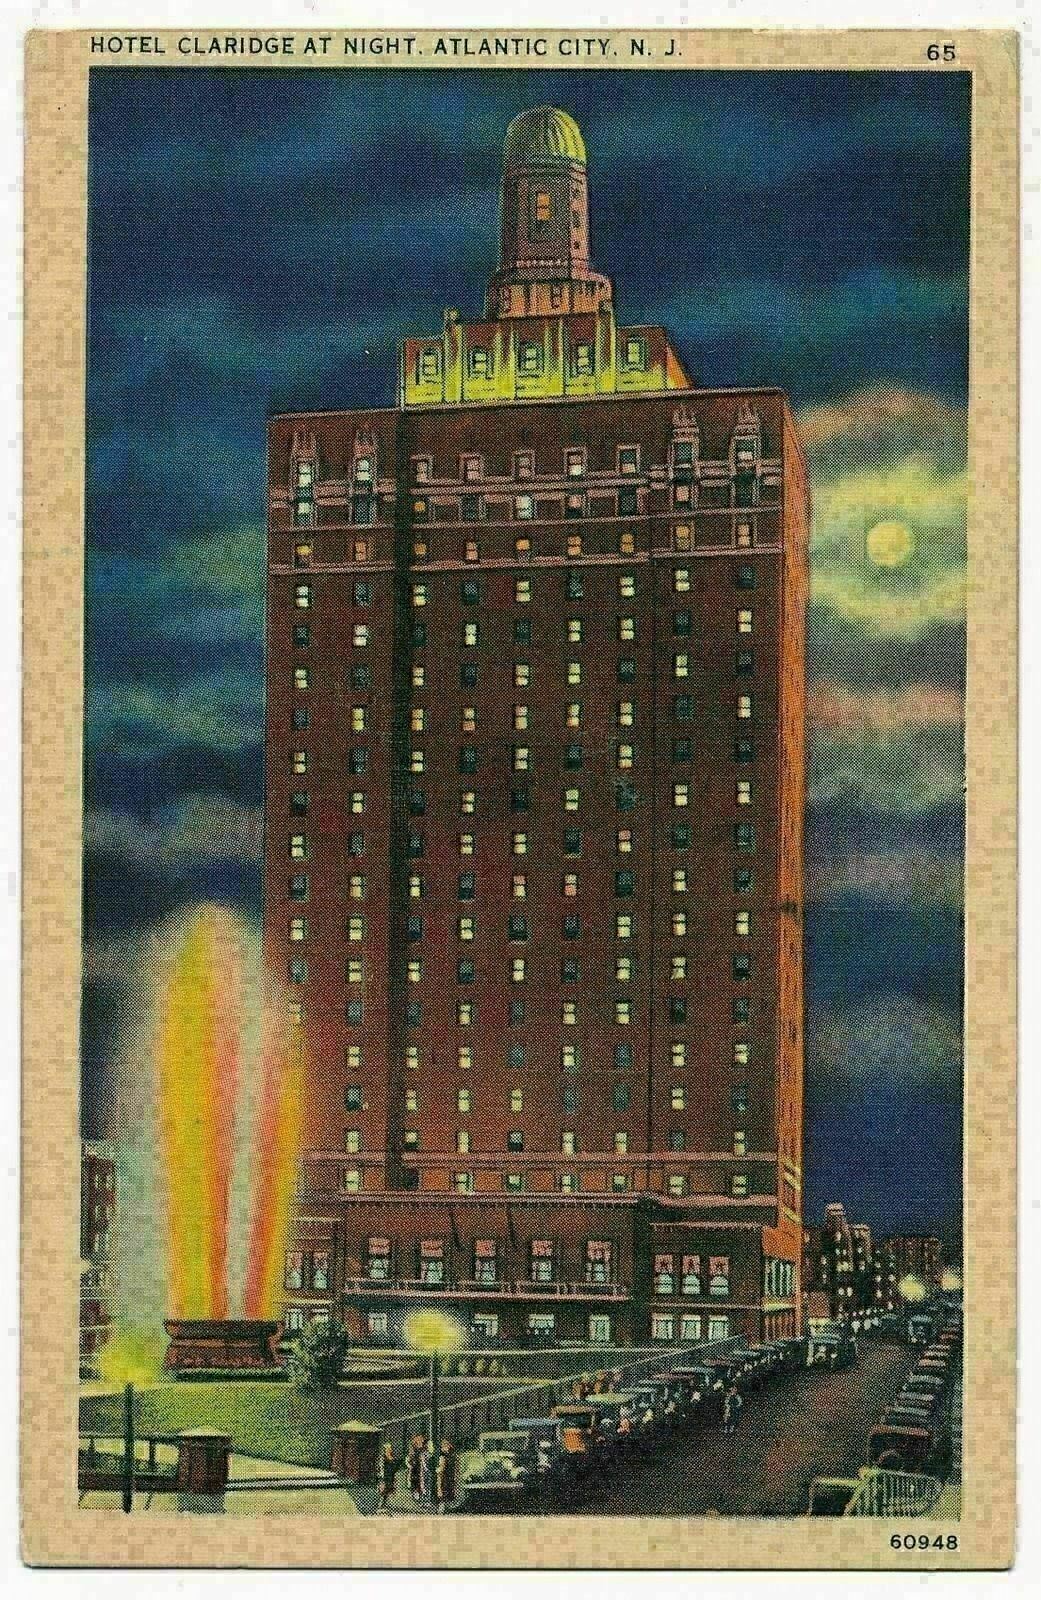 Hotel Claridge at Night, Atlantic City, New Jersey 1940